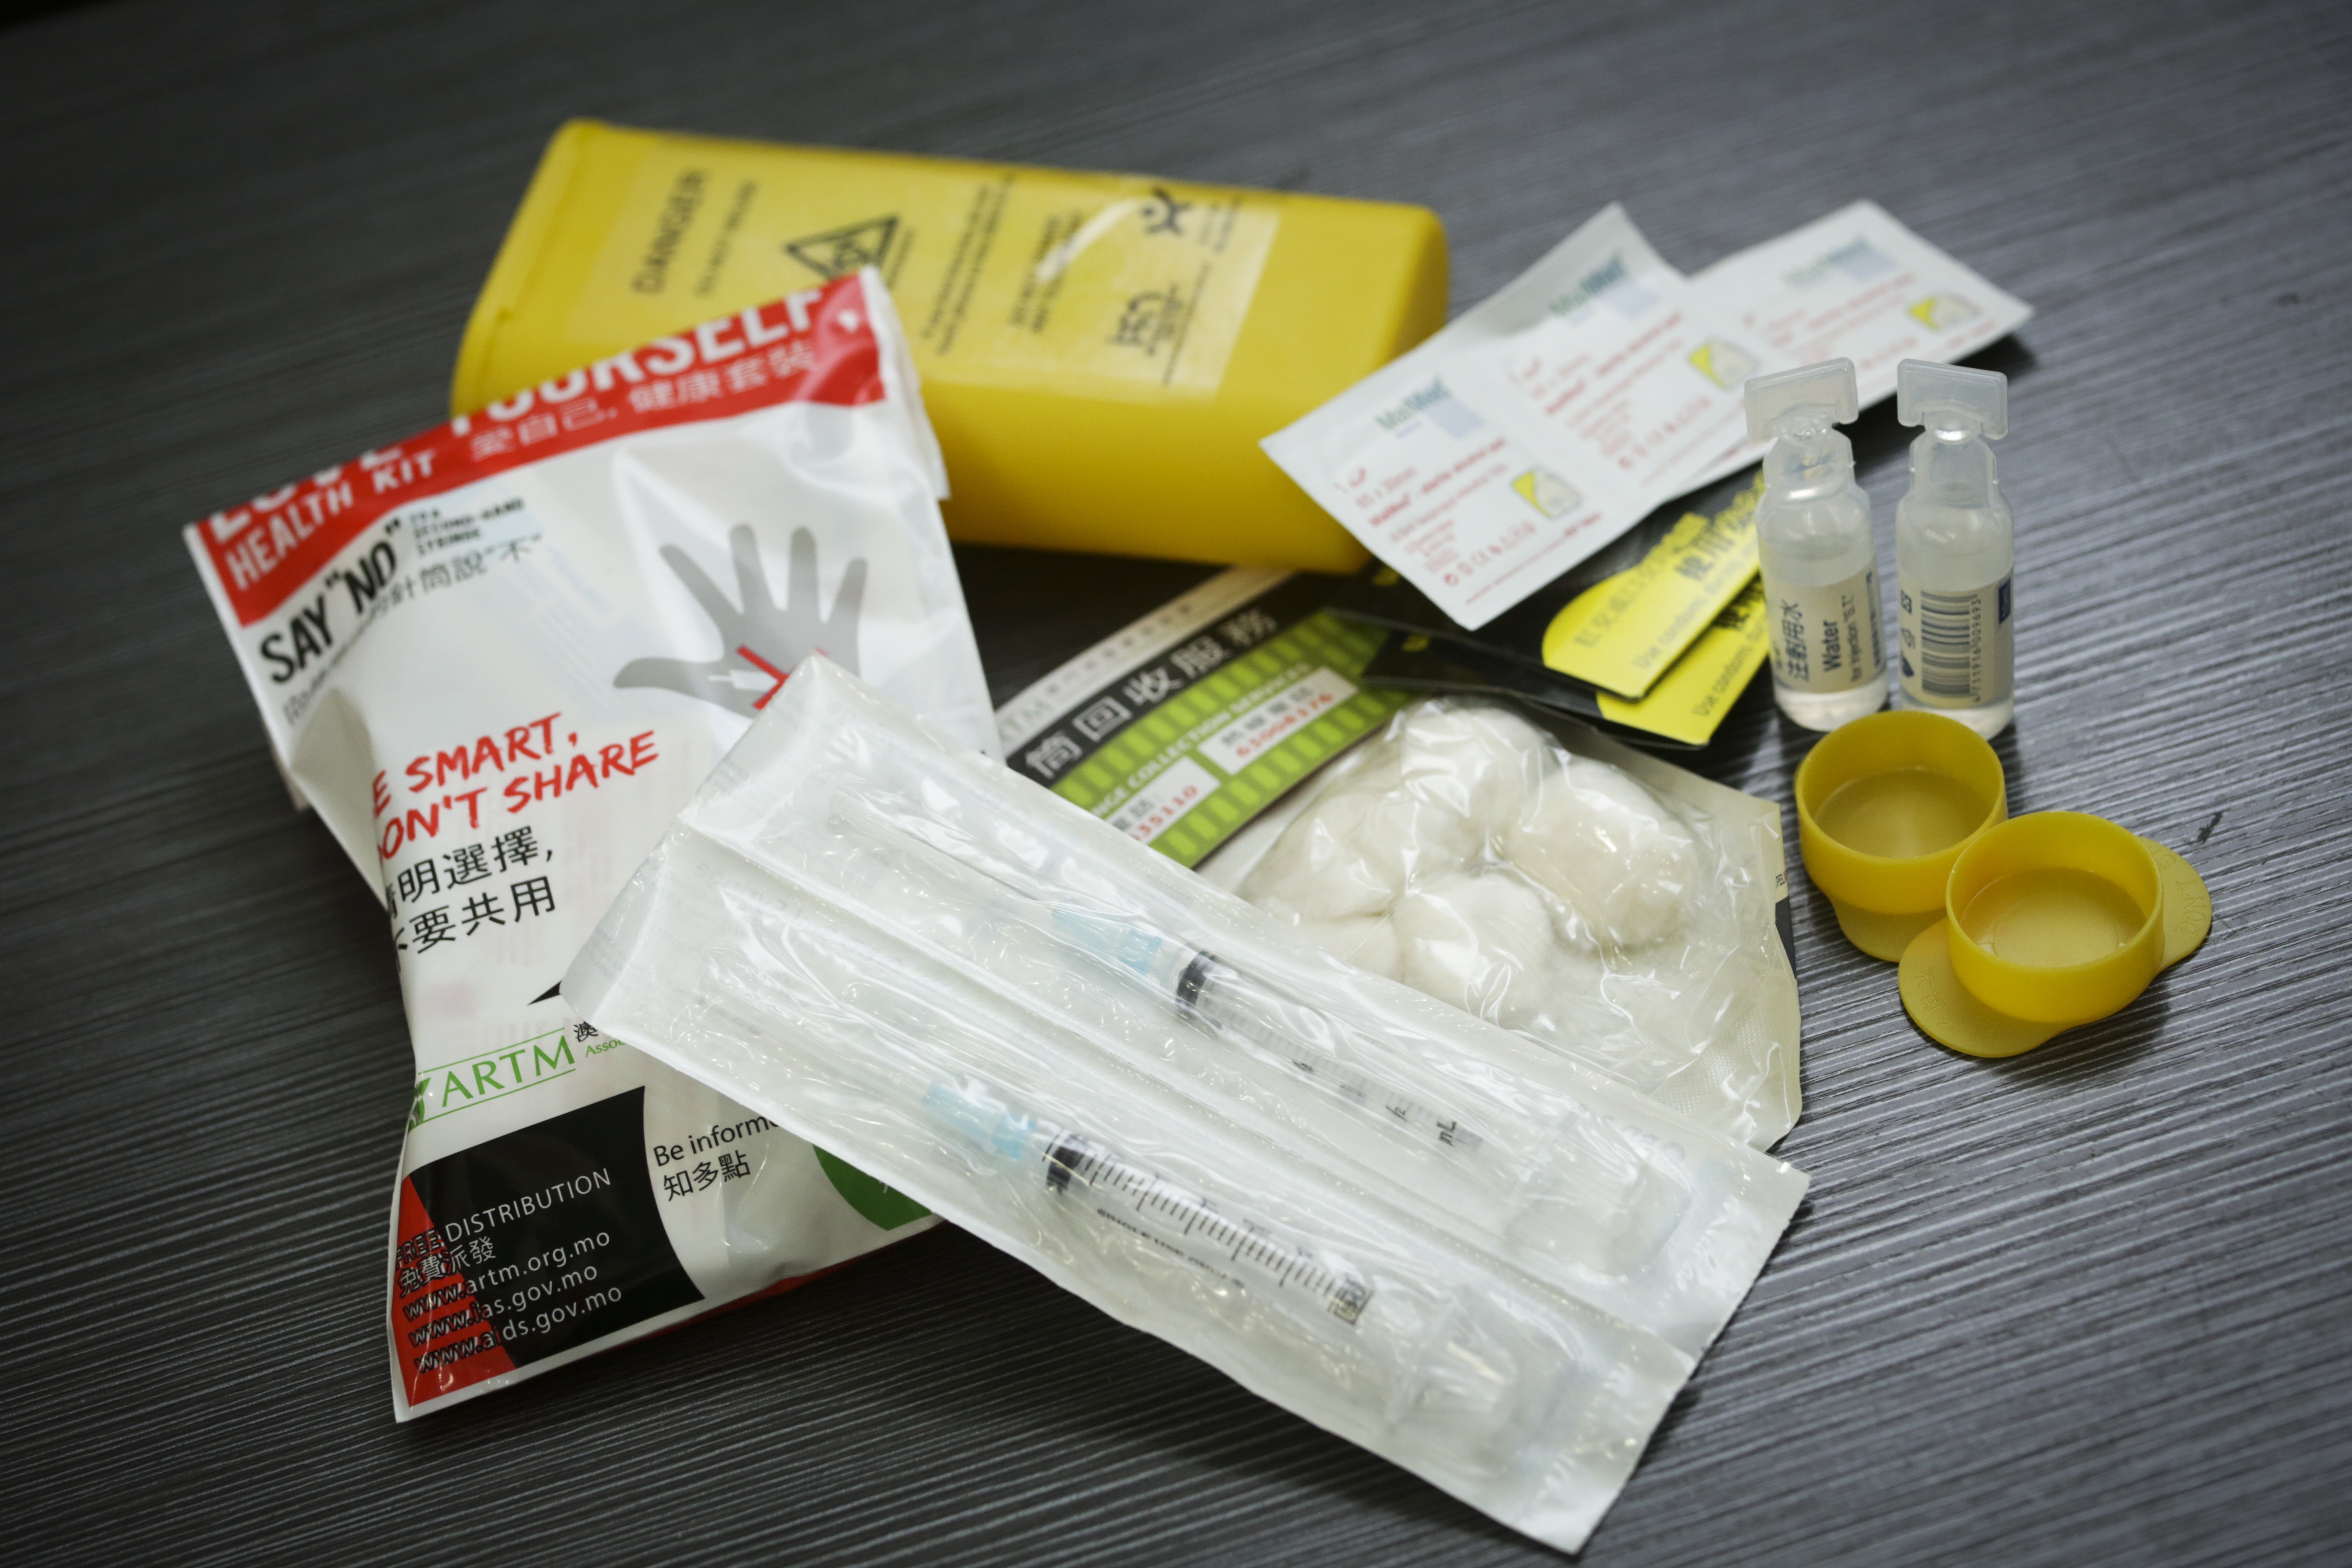 A drug paraphernalia kit at the treatment centre in Macau. Photo: May Tse